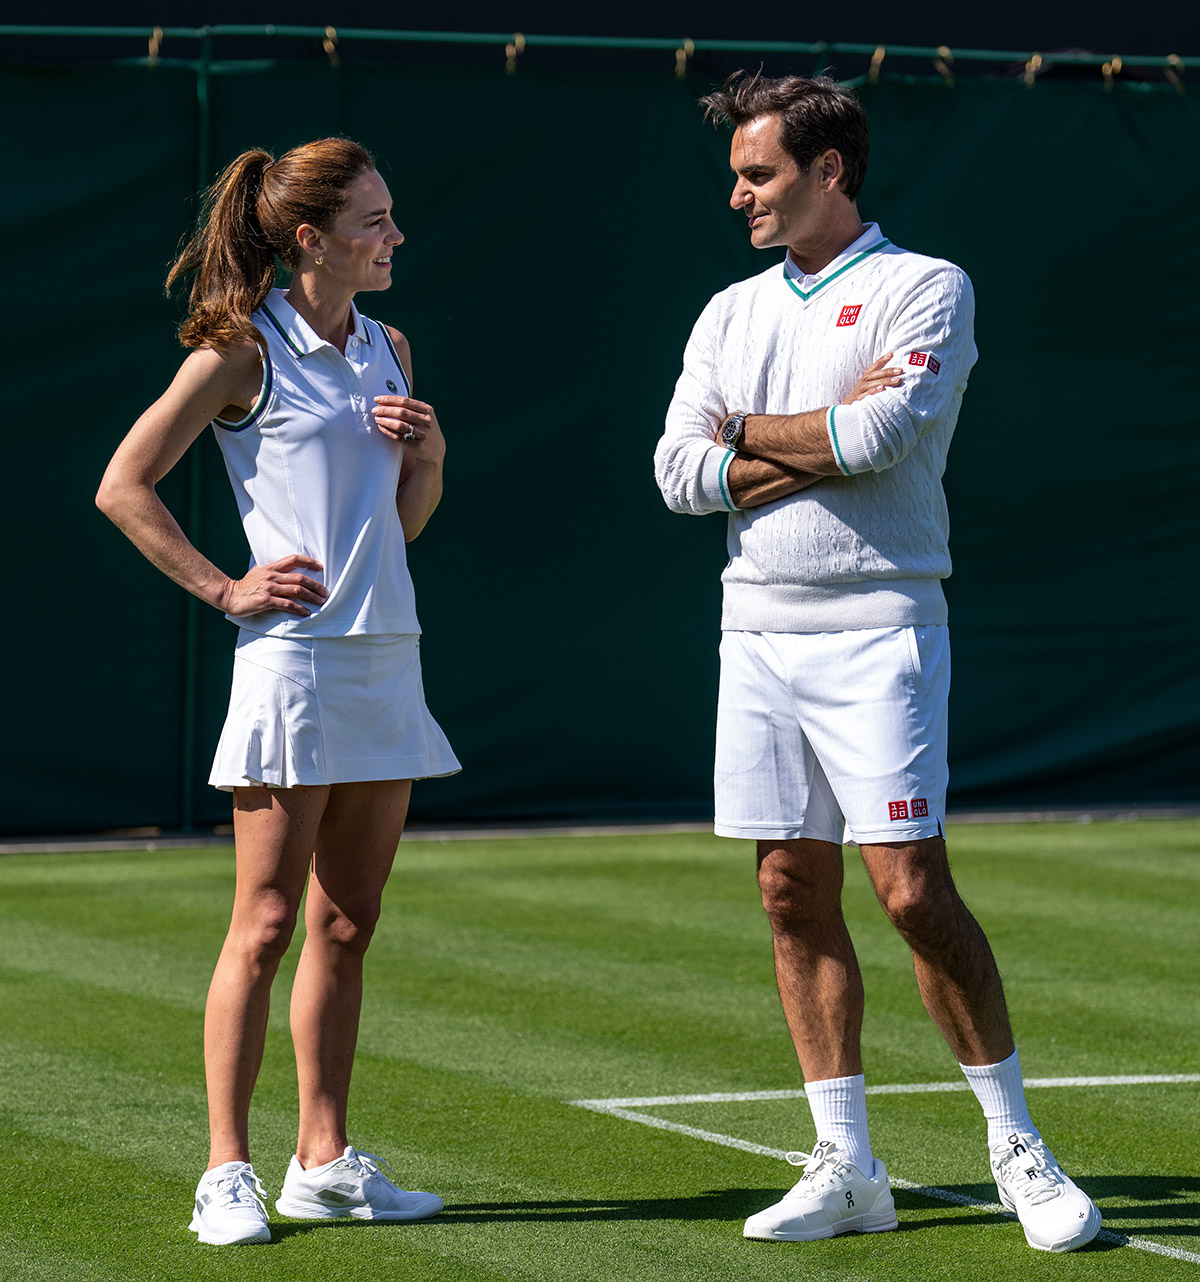 Kate Middleton y Roger Federer juegan al tenis en Wimbledon